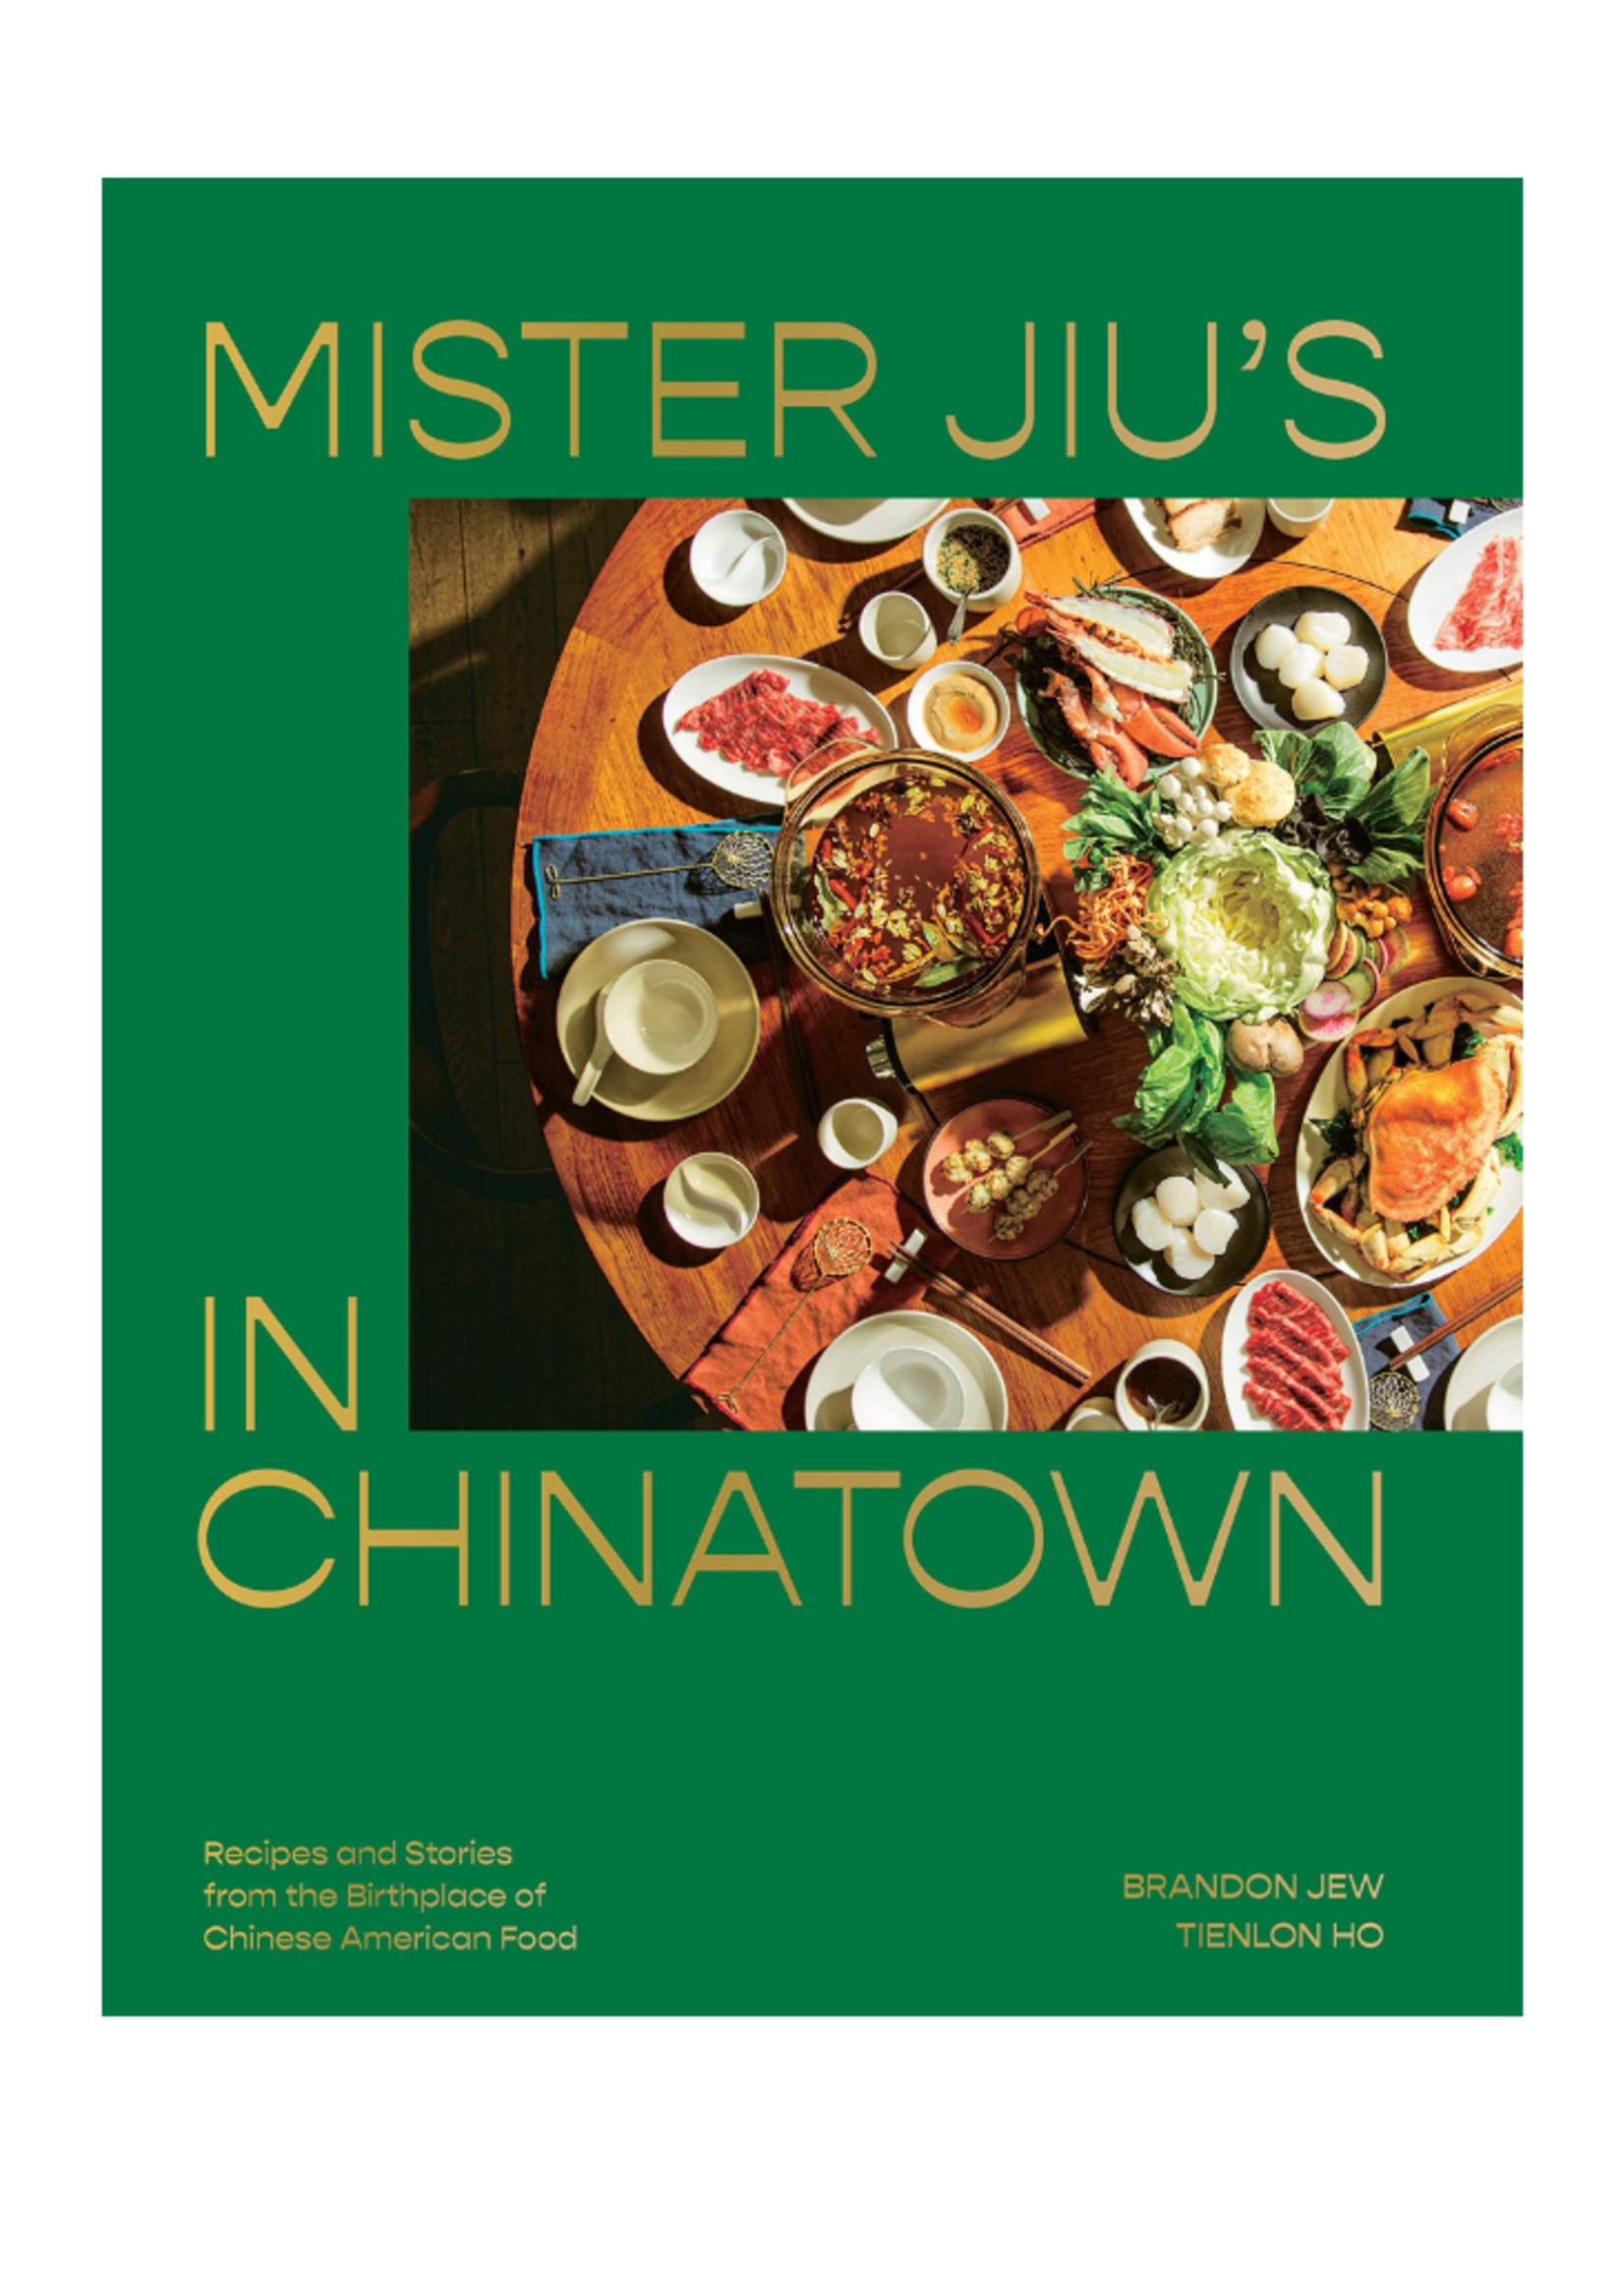 Random House Mister Jiu's in Chinatown by BrandonJew and Tienlon Ho